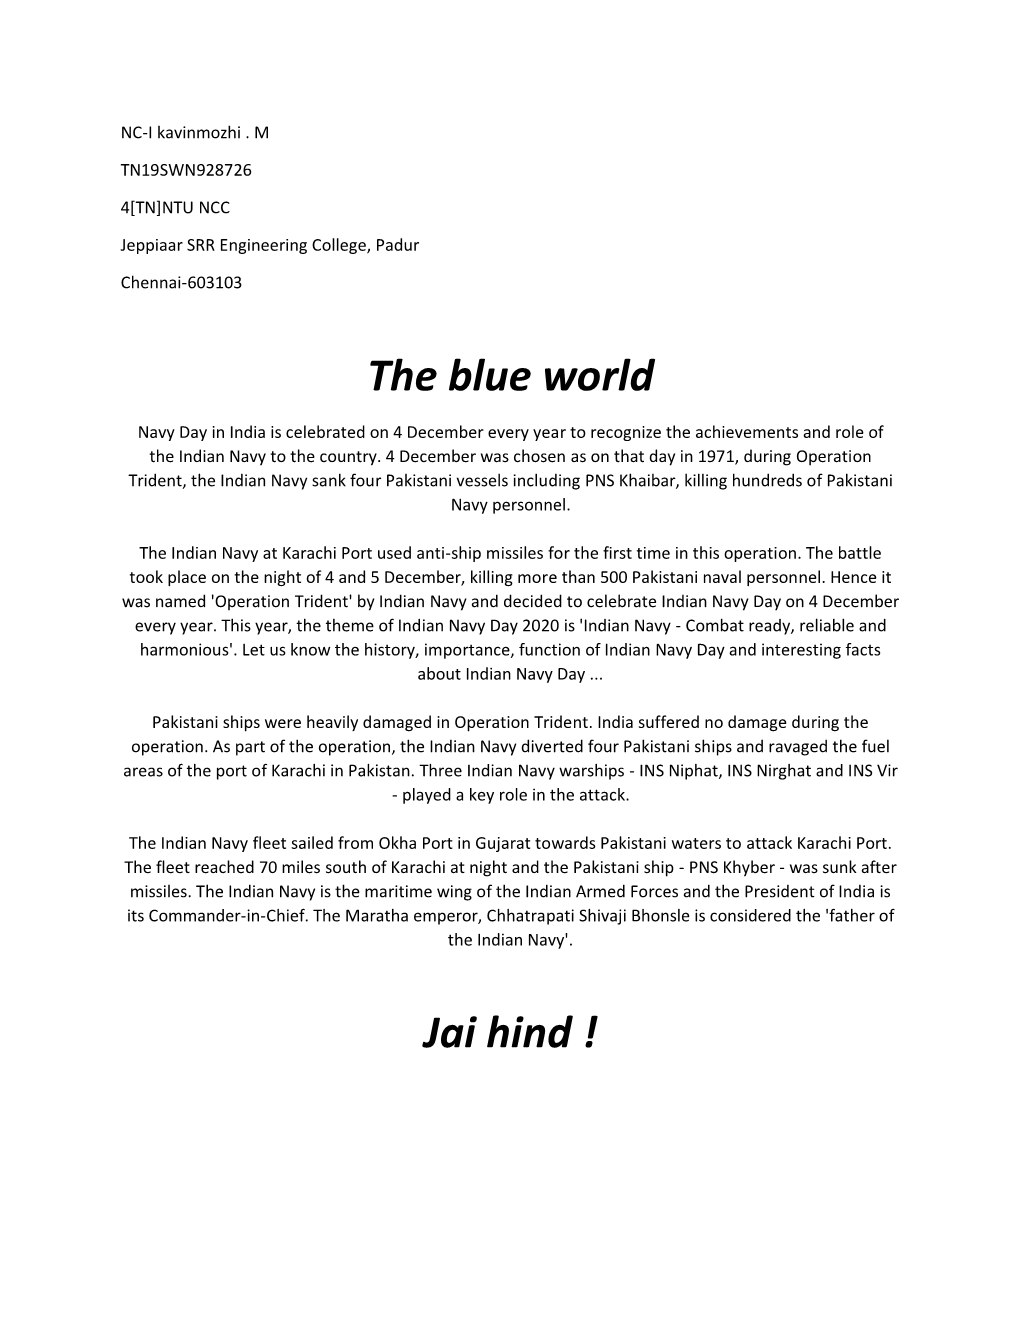 The Blue World Jai Hind !